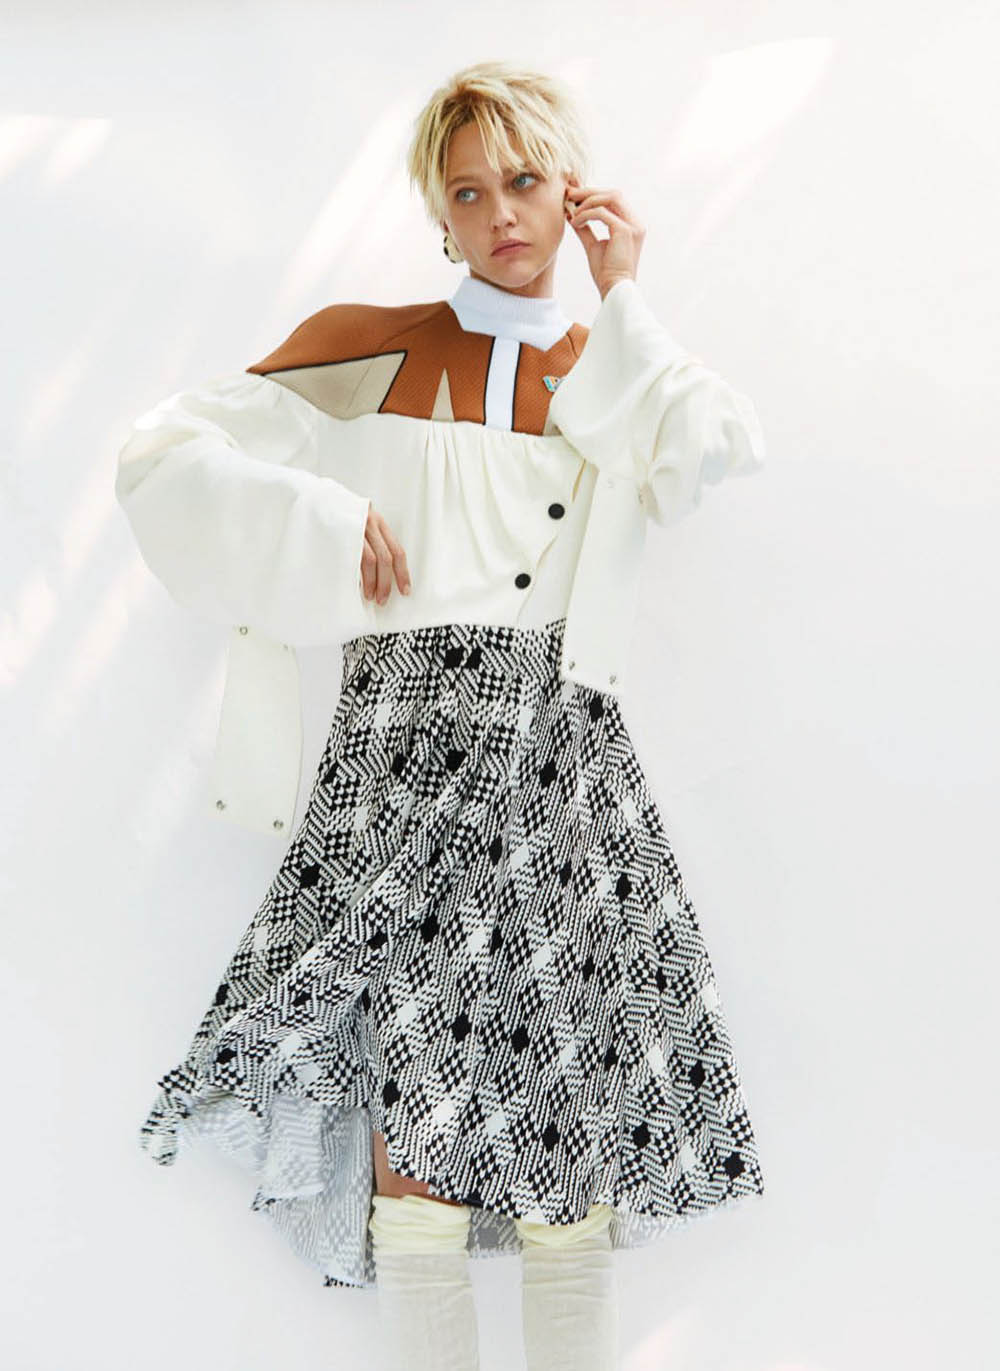 Sasha Pivovarova covers Vogue Thailand September 2018 by Natth Jaturapahu